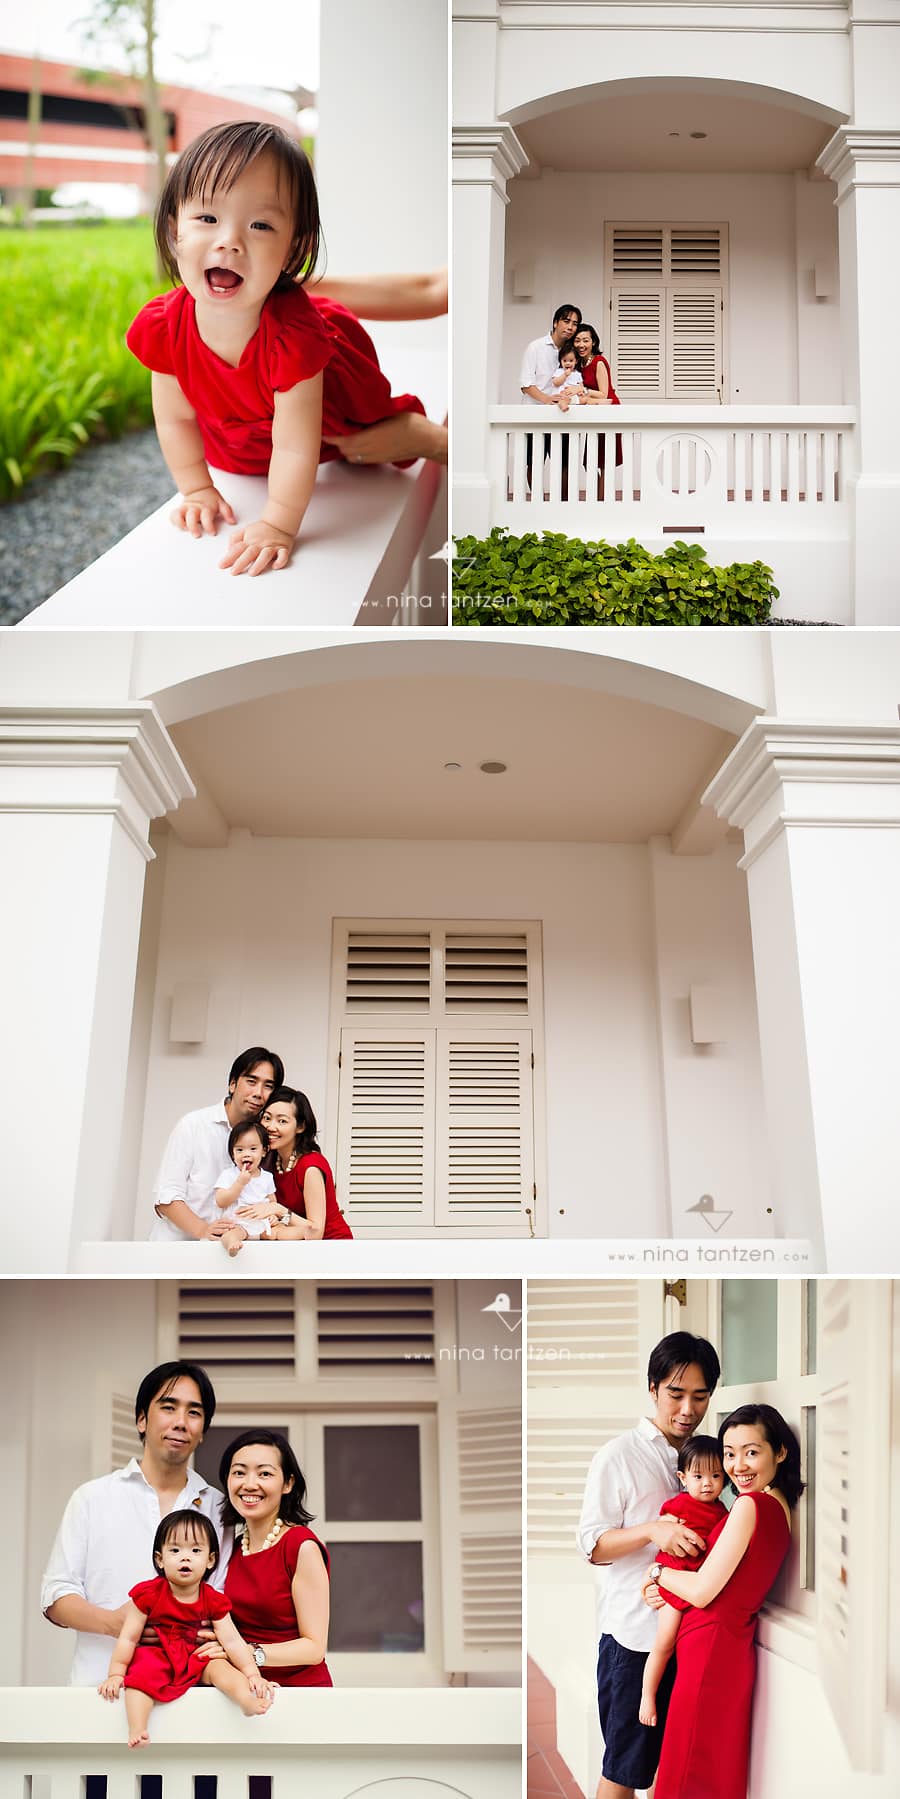 beautiful family photography by nina tantzen in singapore